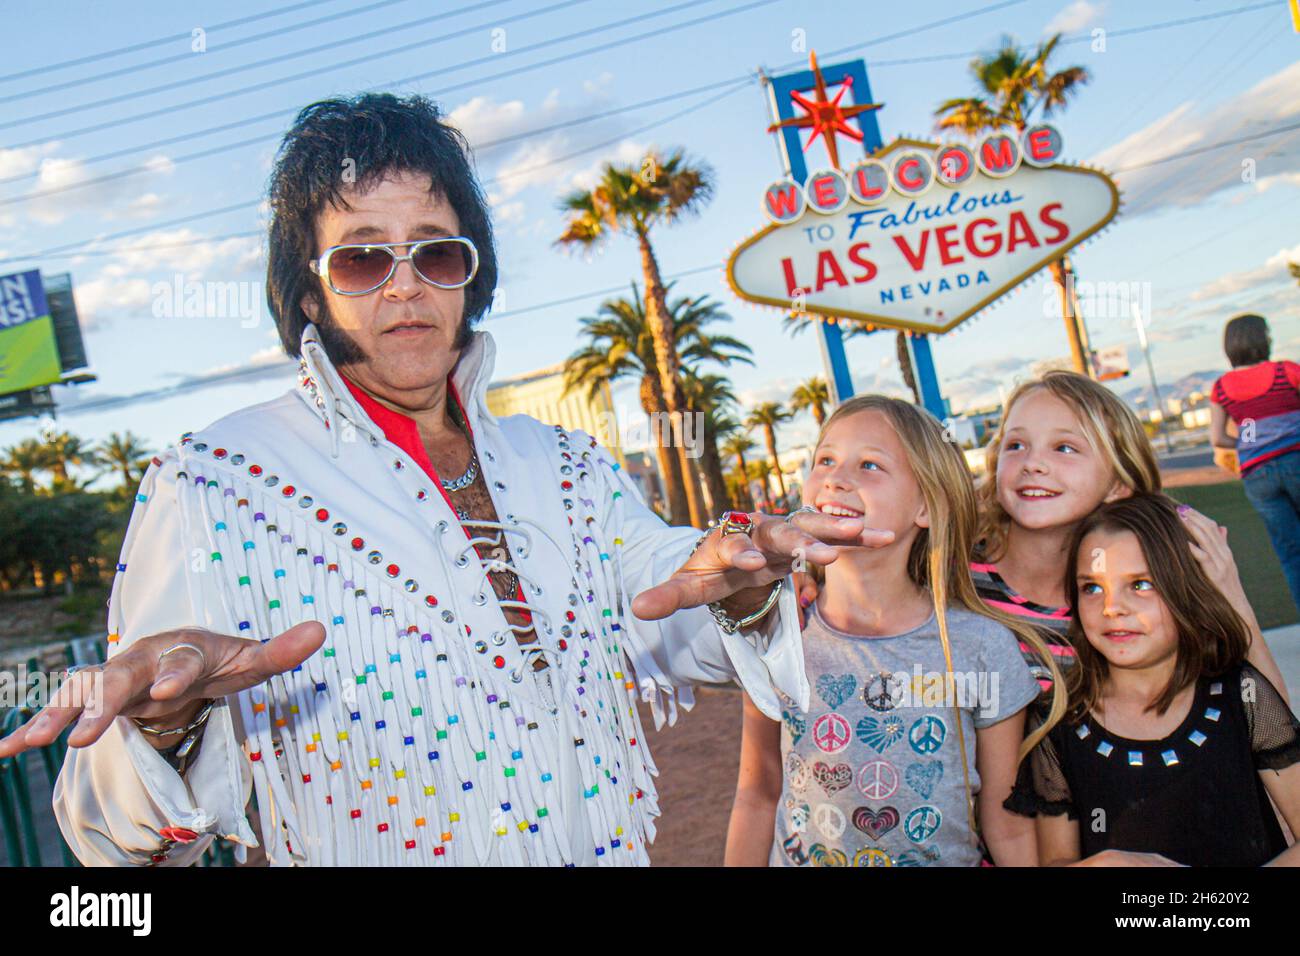 Las Vegas Nevada, The Strip, Willkommen im fabelhaften Las Vegas Schild historischer Mann, Elvis Presley Imitator Berühmtheit Look-alike Mädchen Kinder Stockfoto